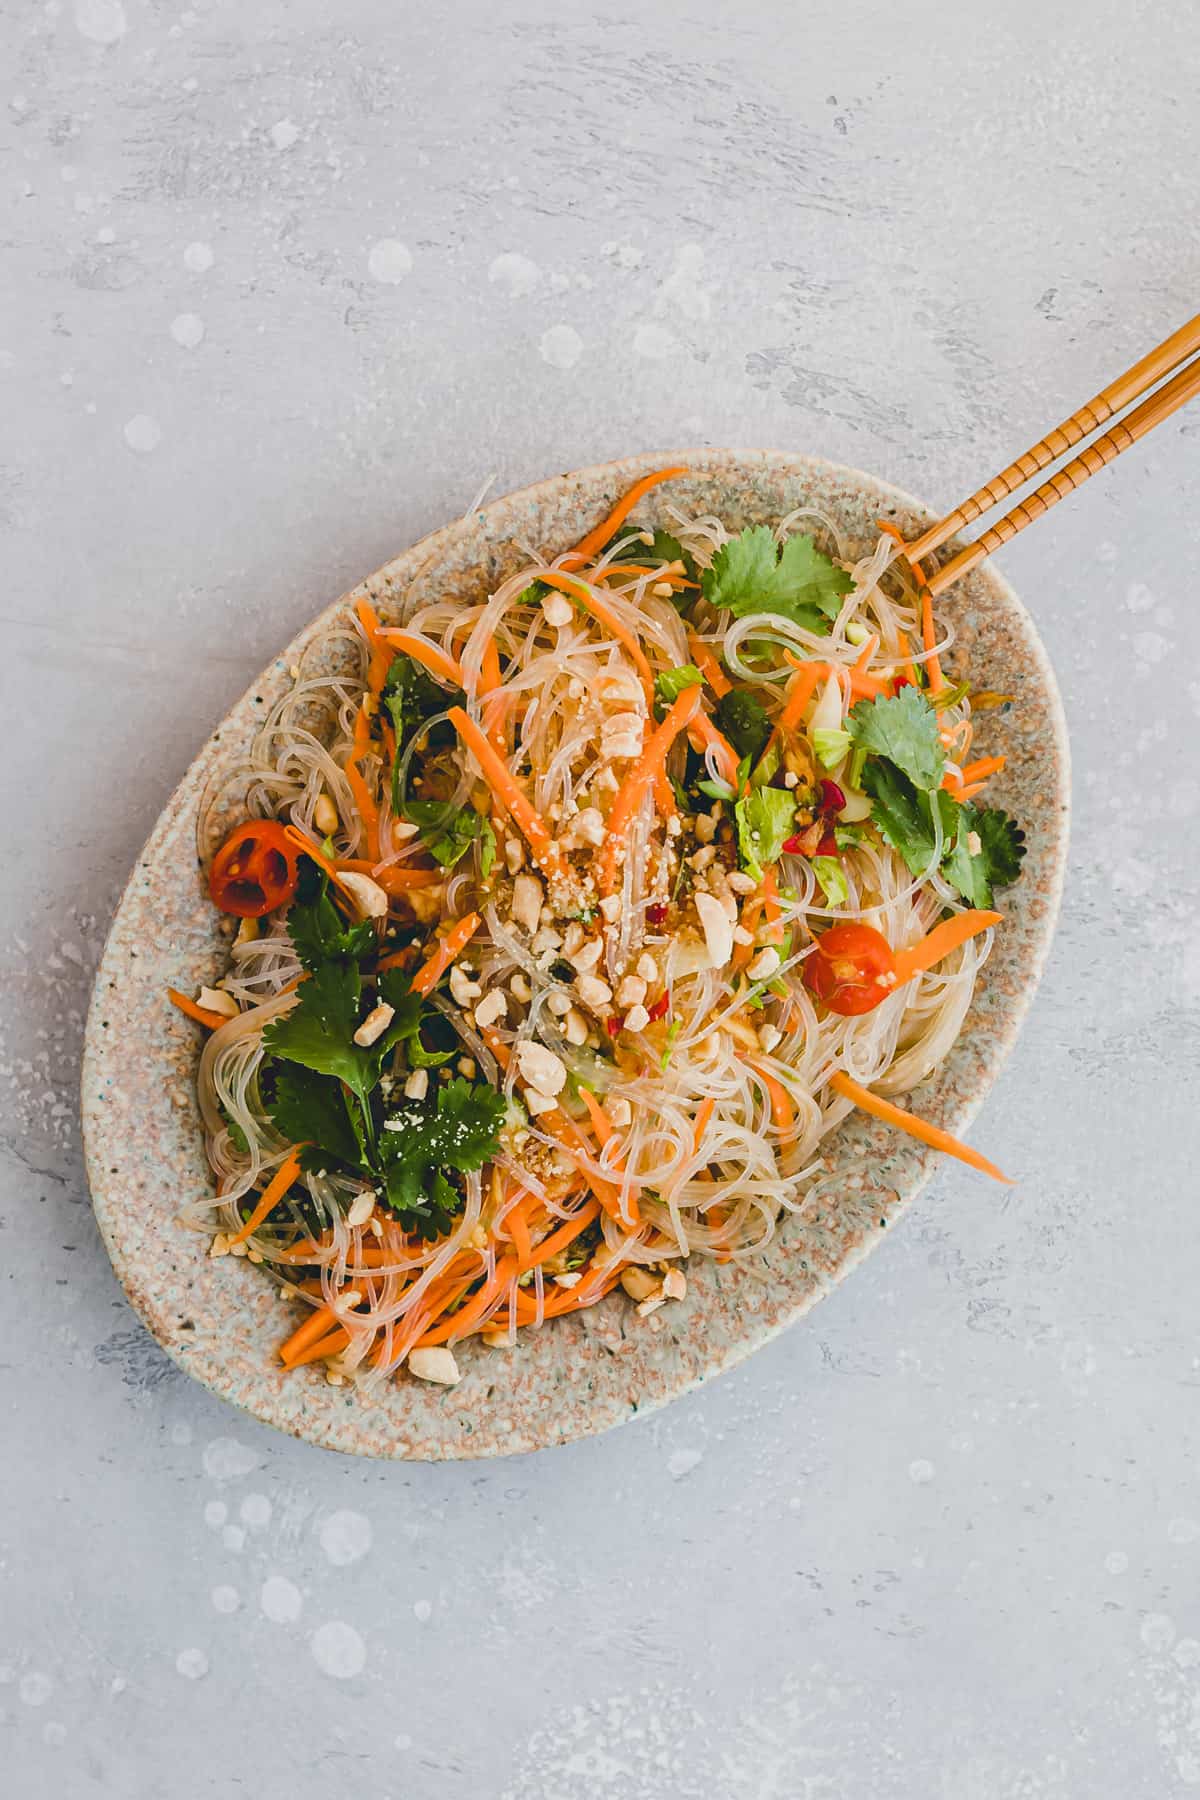 vegan thai glass noodle salad on a plate with chopsticks